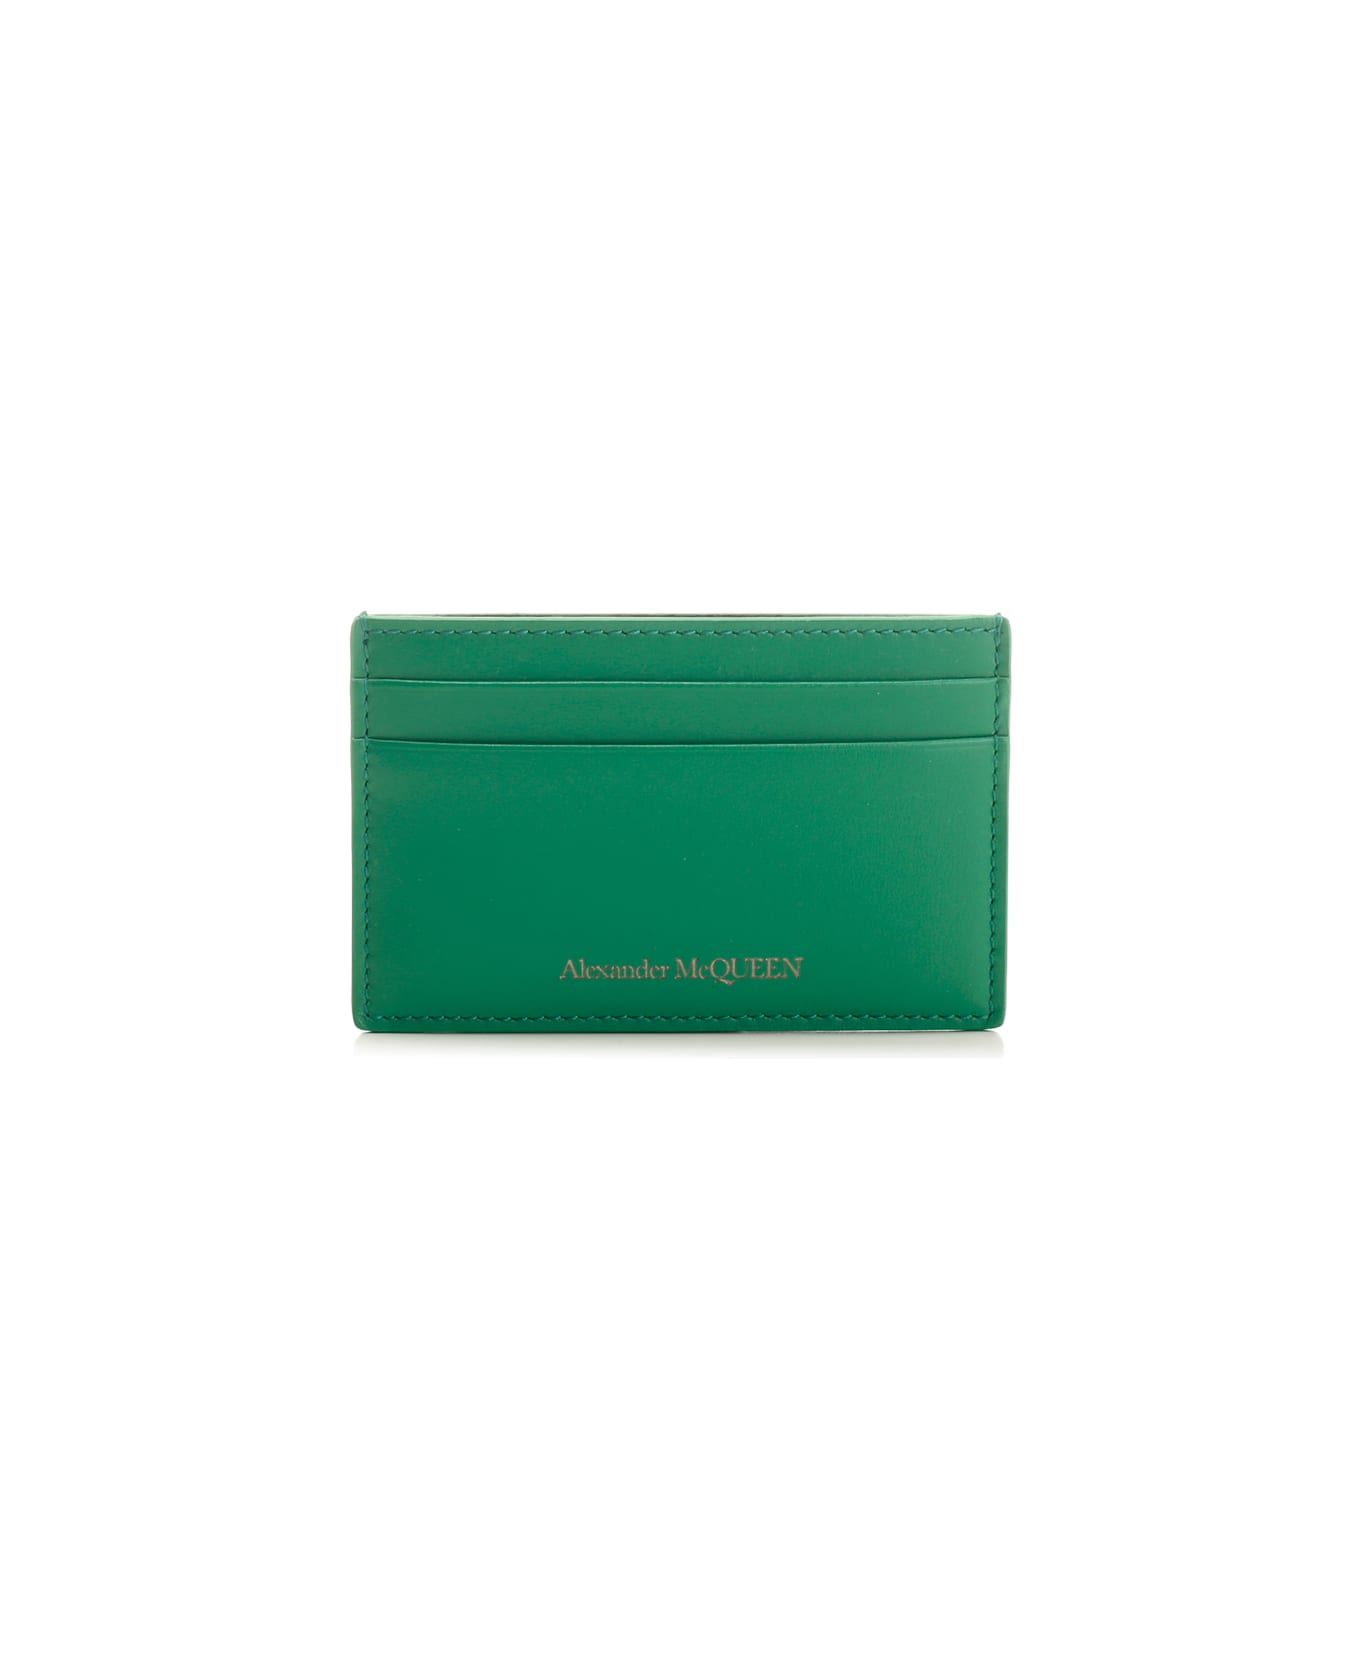 Alexander McQueen Leather Card Holder - VERDE